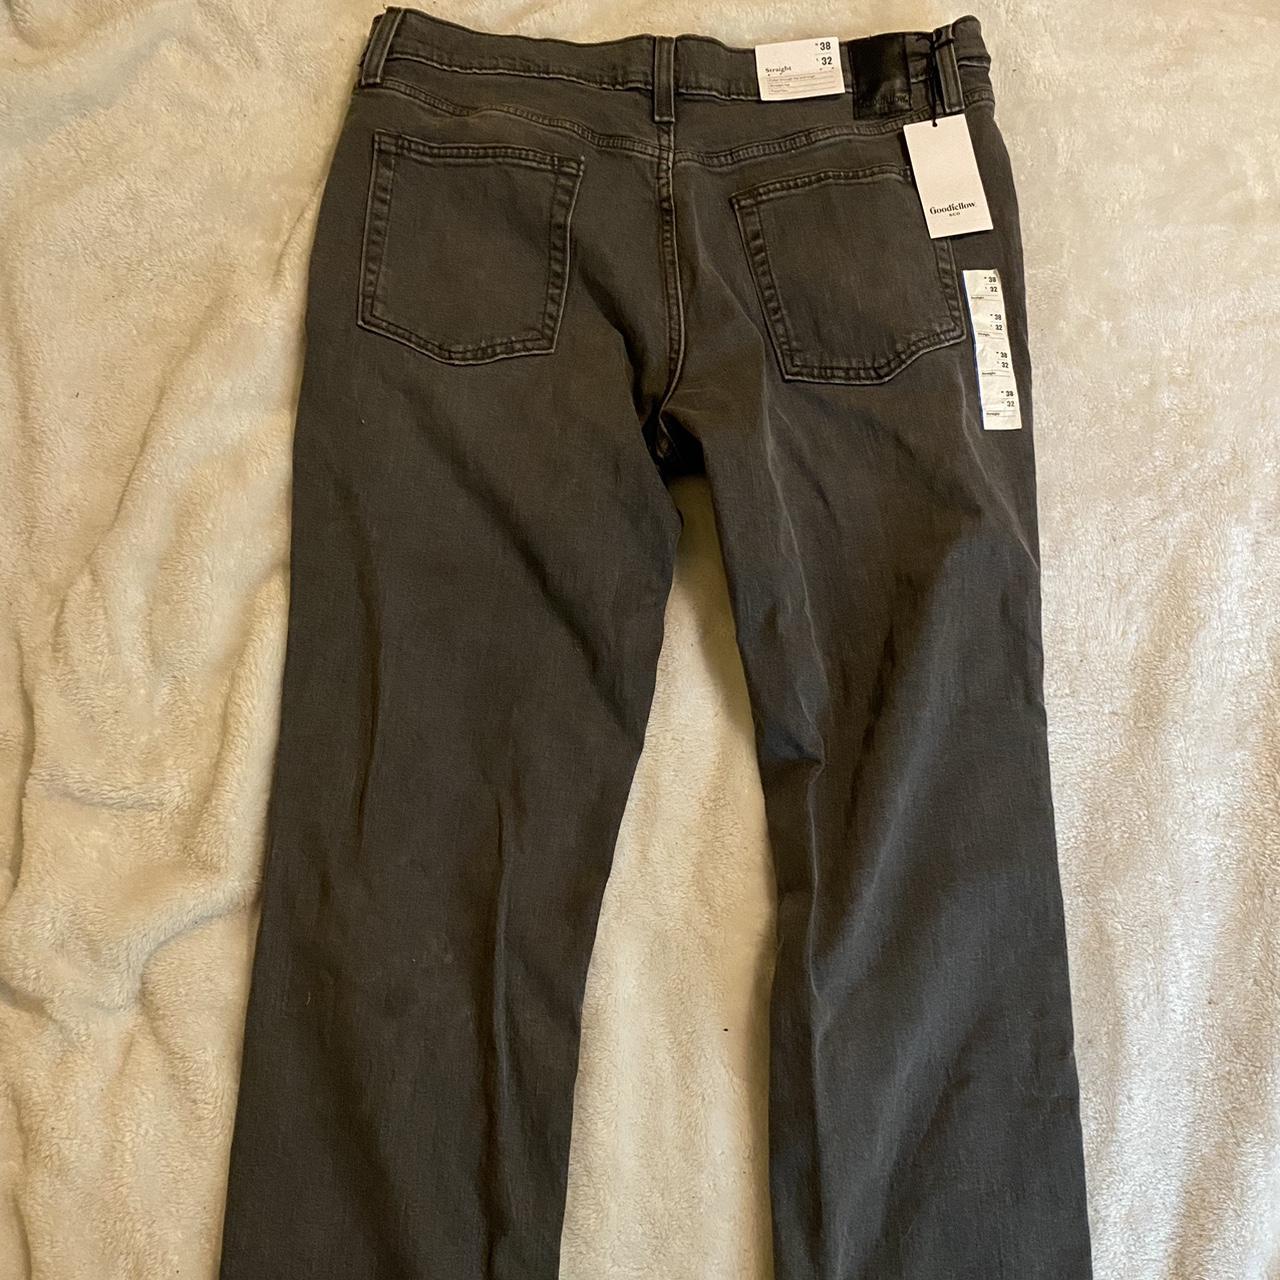 Brand New Men’s Straight Cut Jeans Size 38x32 Dark... - Depop